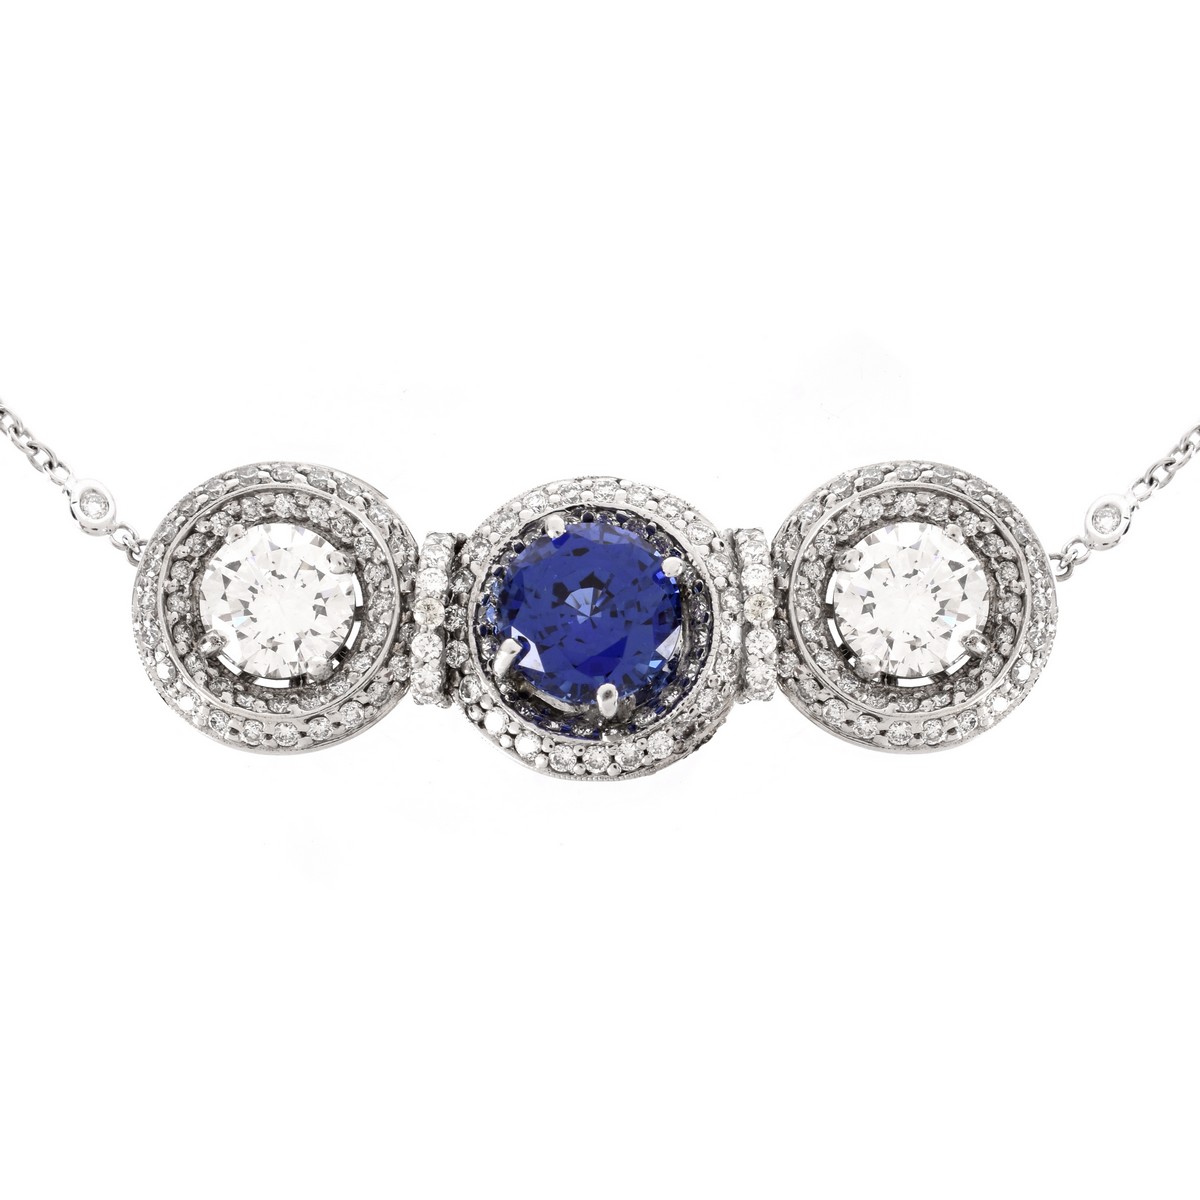 Contemporary Diamond and Sapphire Necklace